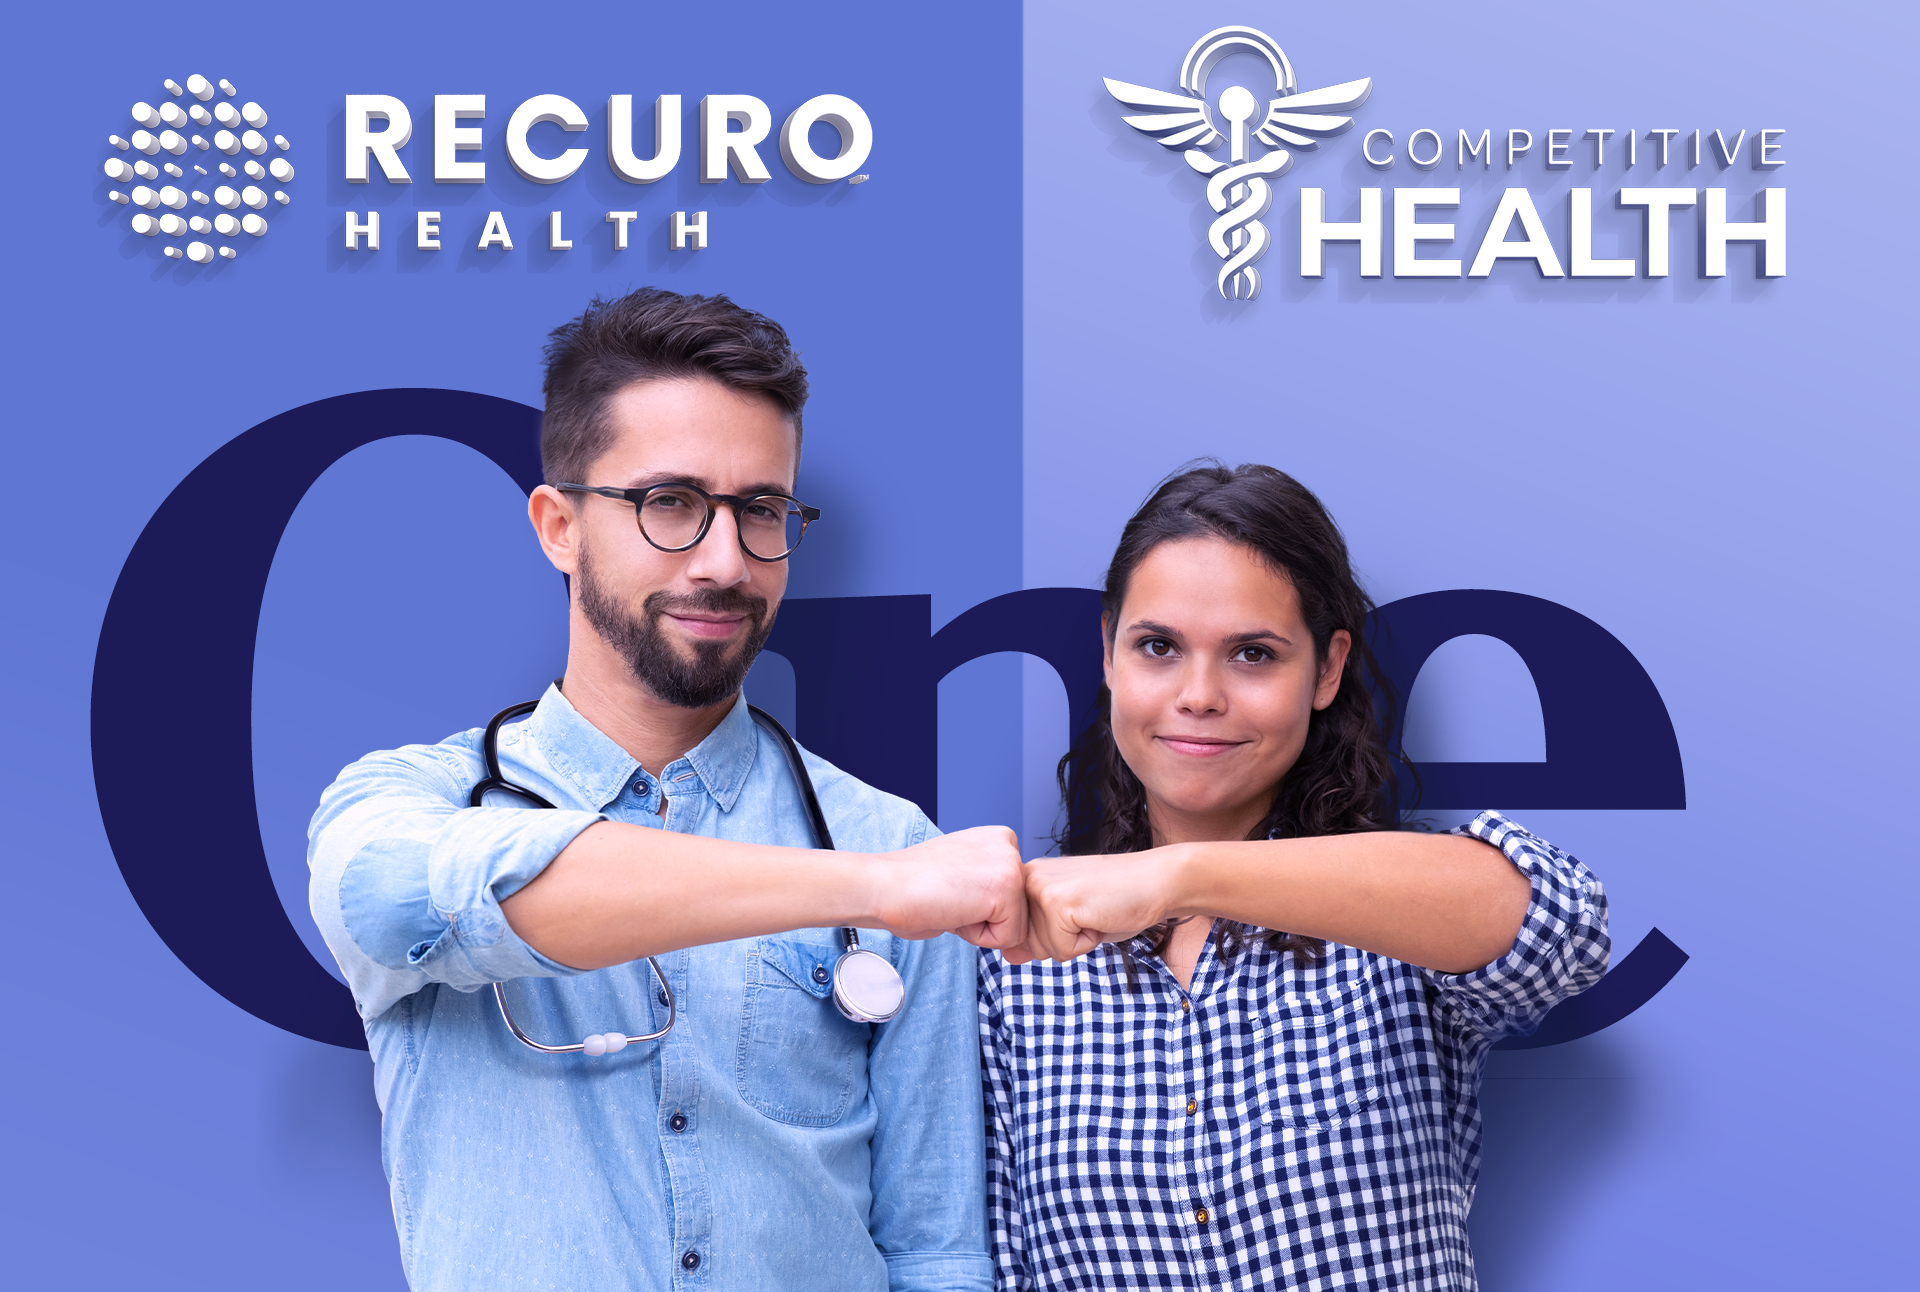 Recuro Health adquiere Competitive Health